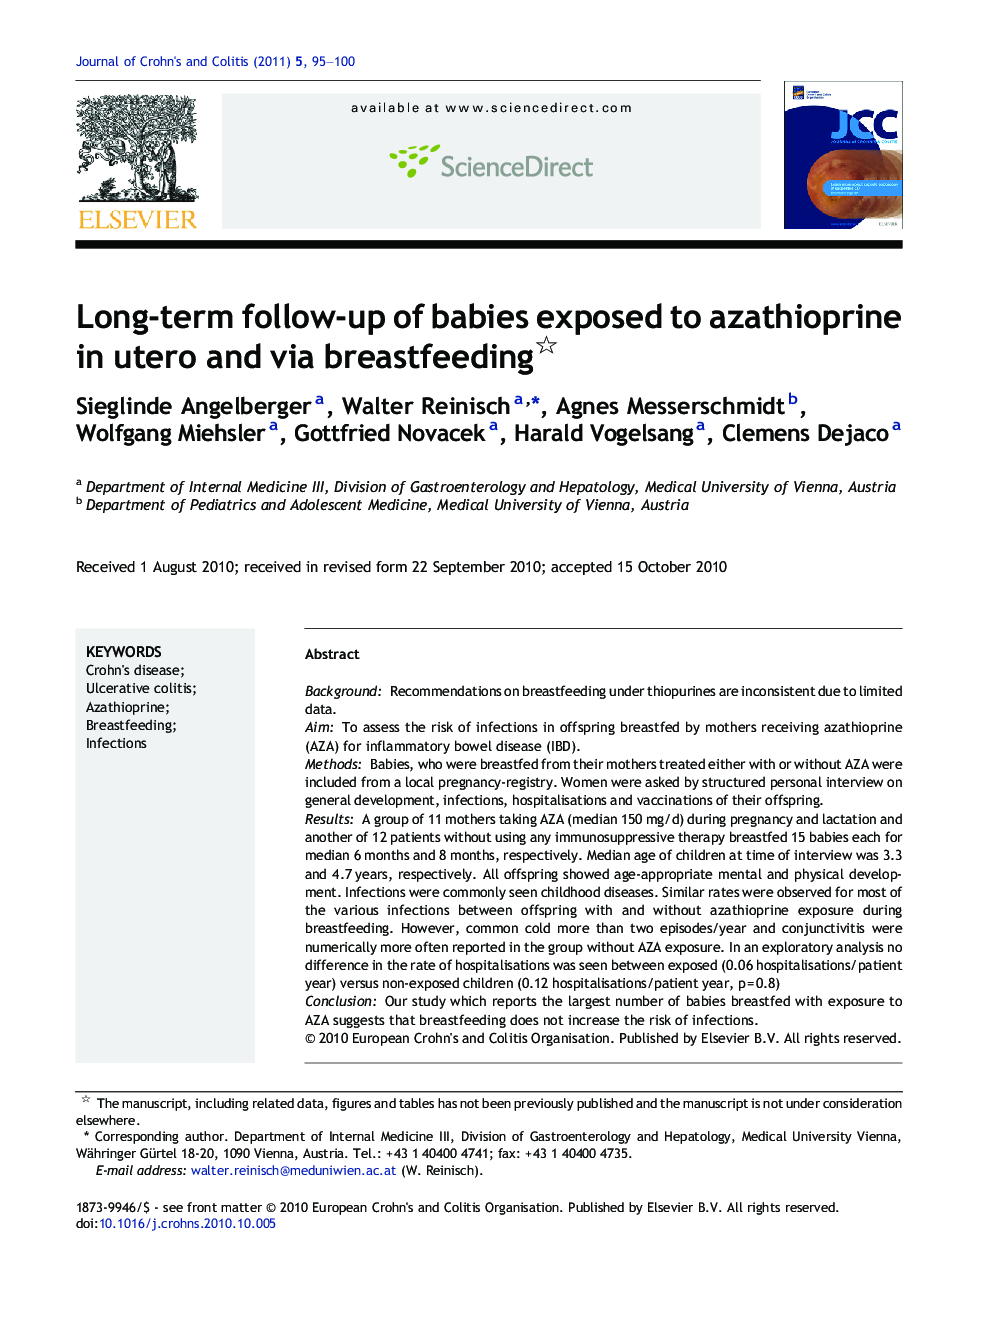 Long-term follow-up of babies exposed to azathioprine in utero and via breastfeeding